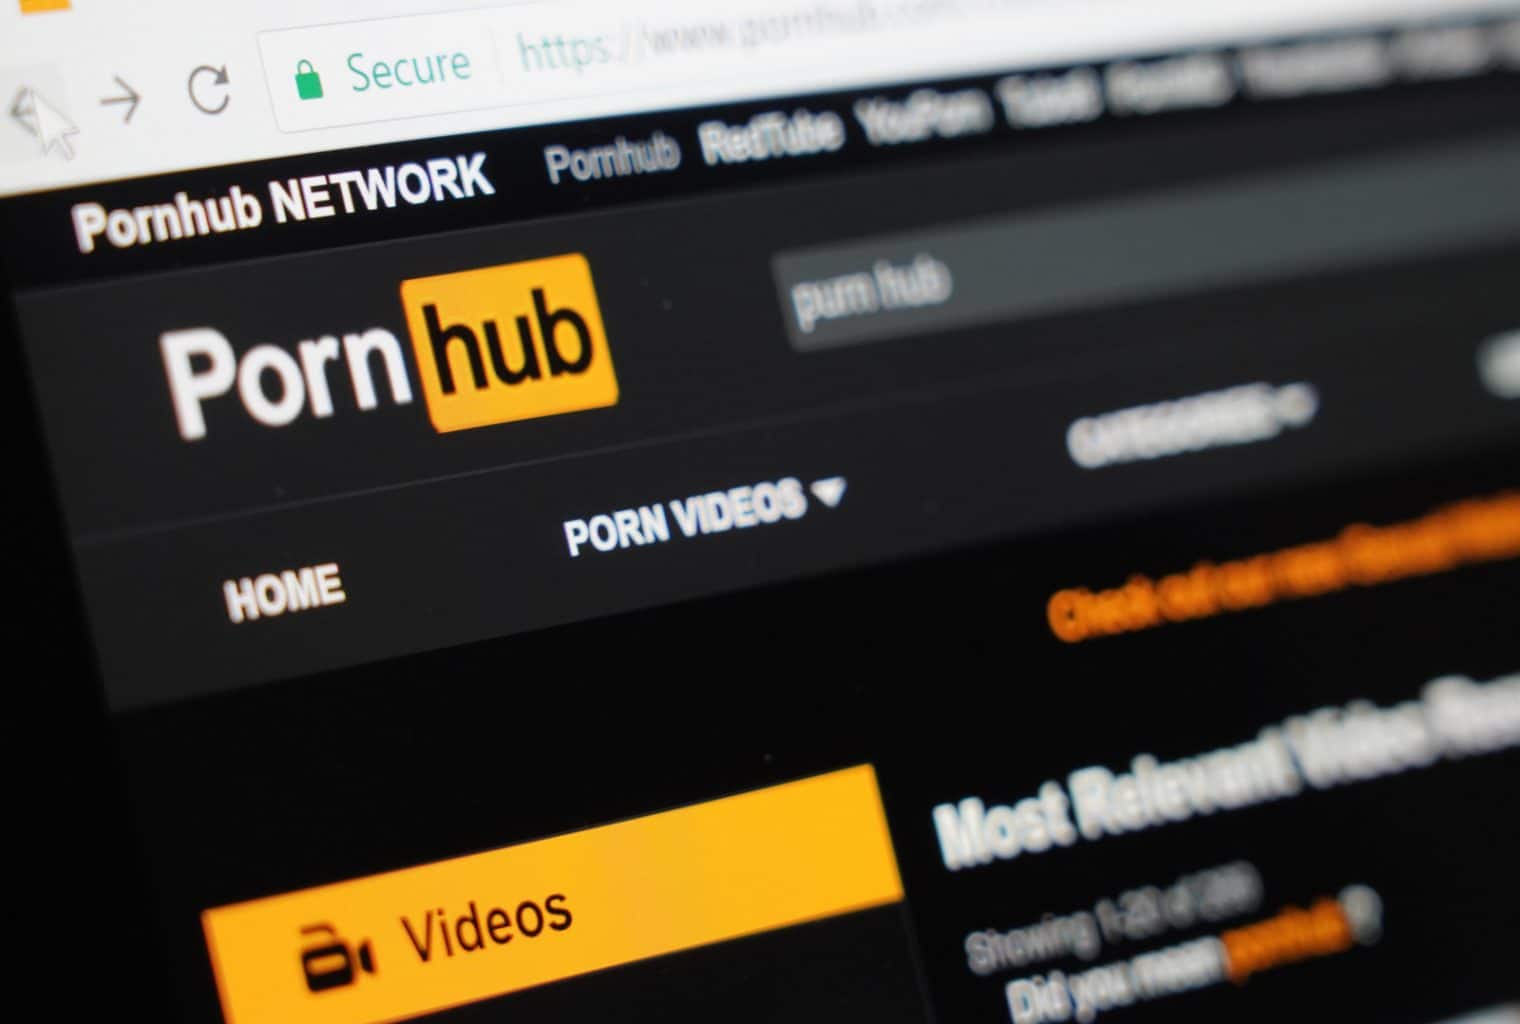 Xxx Unblock Download - Free Online Porn Proxy: Find the Best Online Web Proxy to Unblock Adult Site